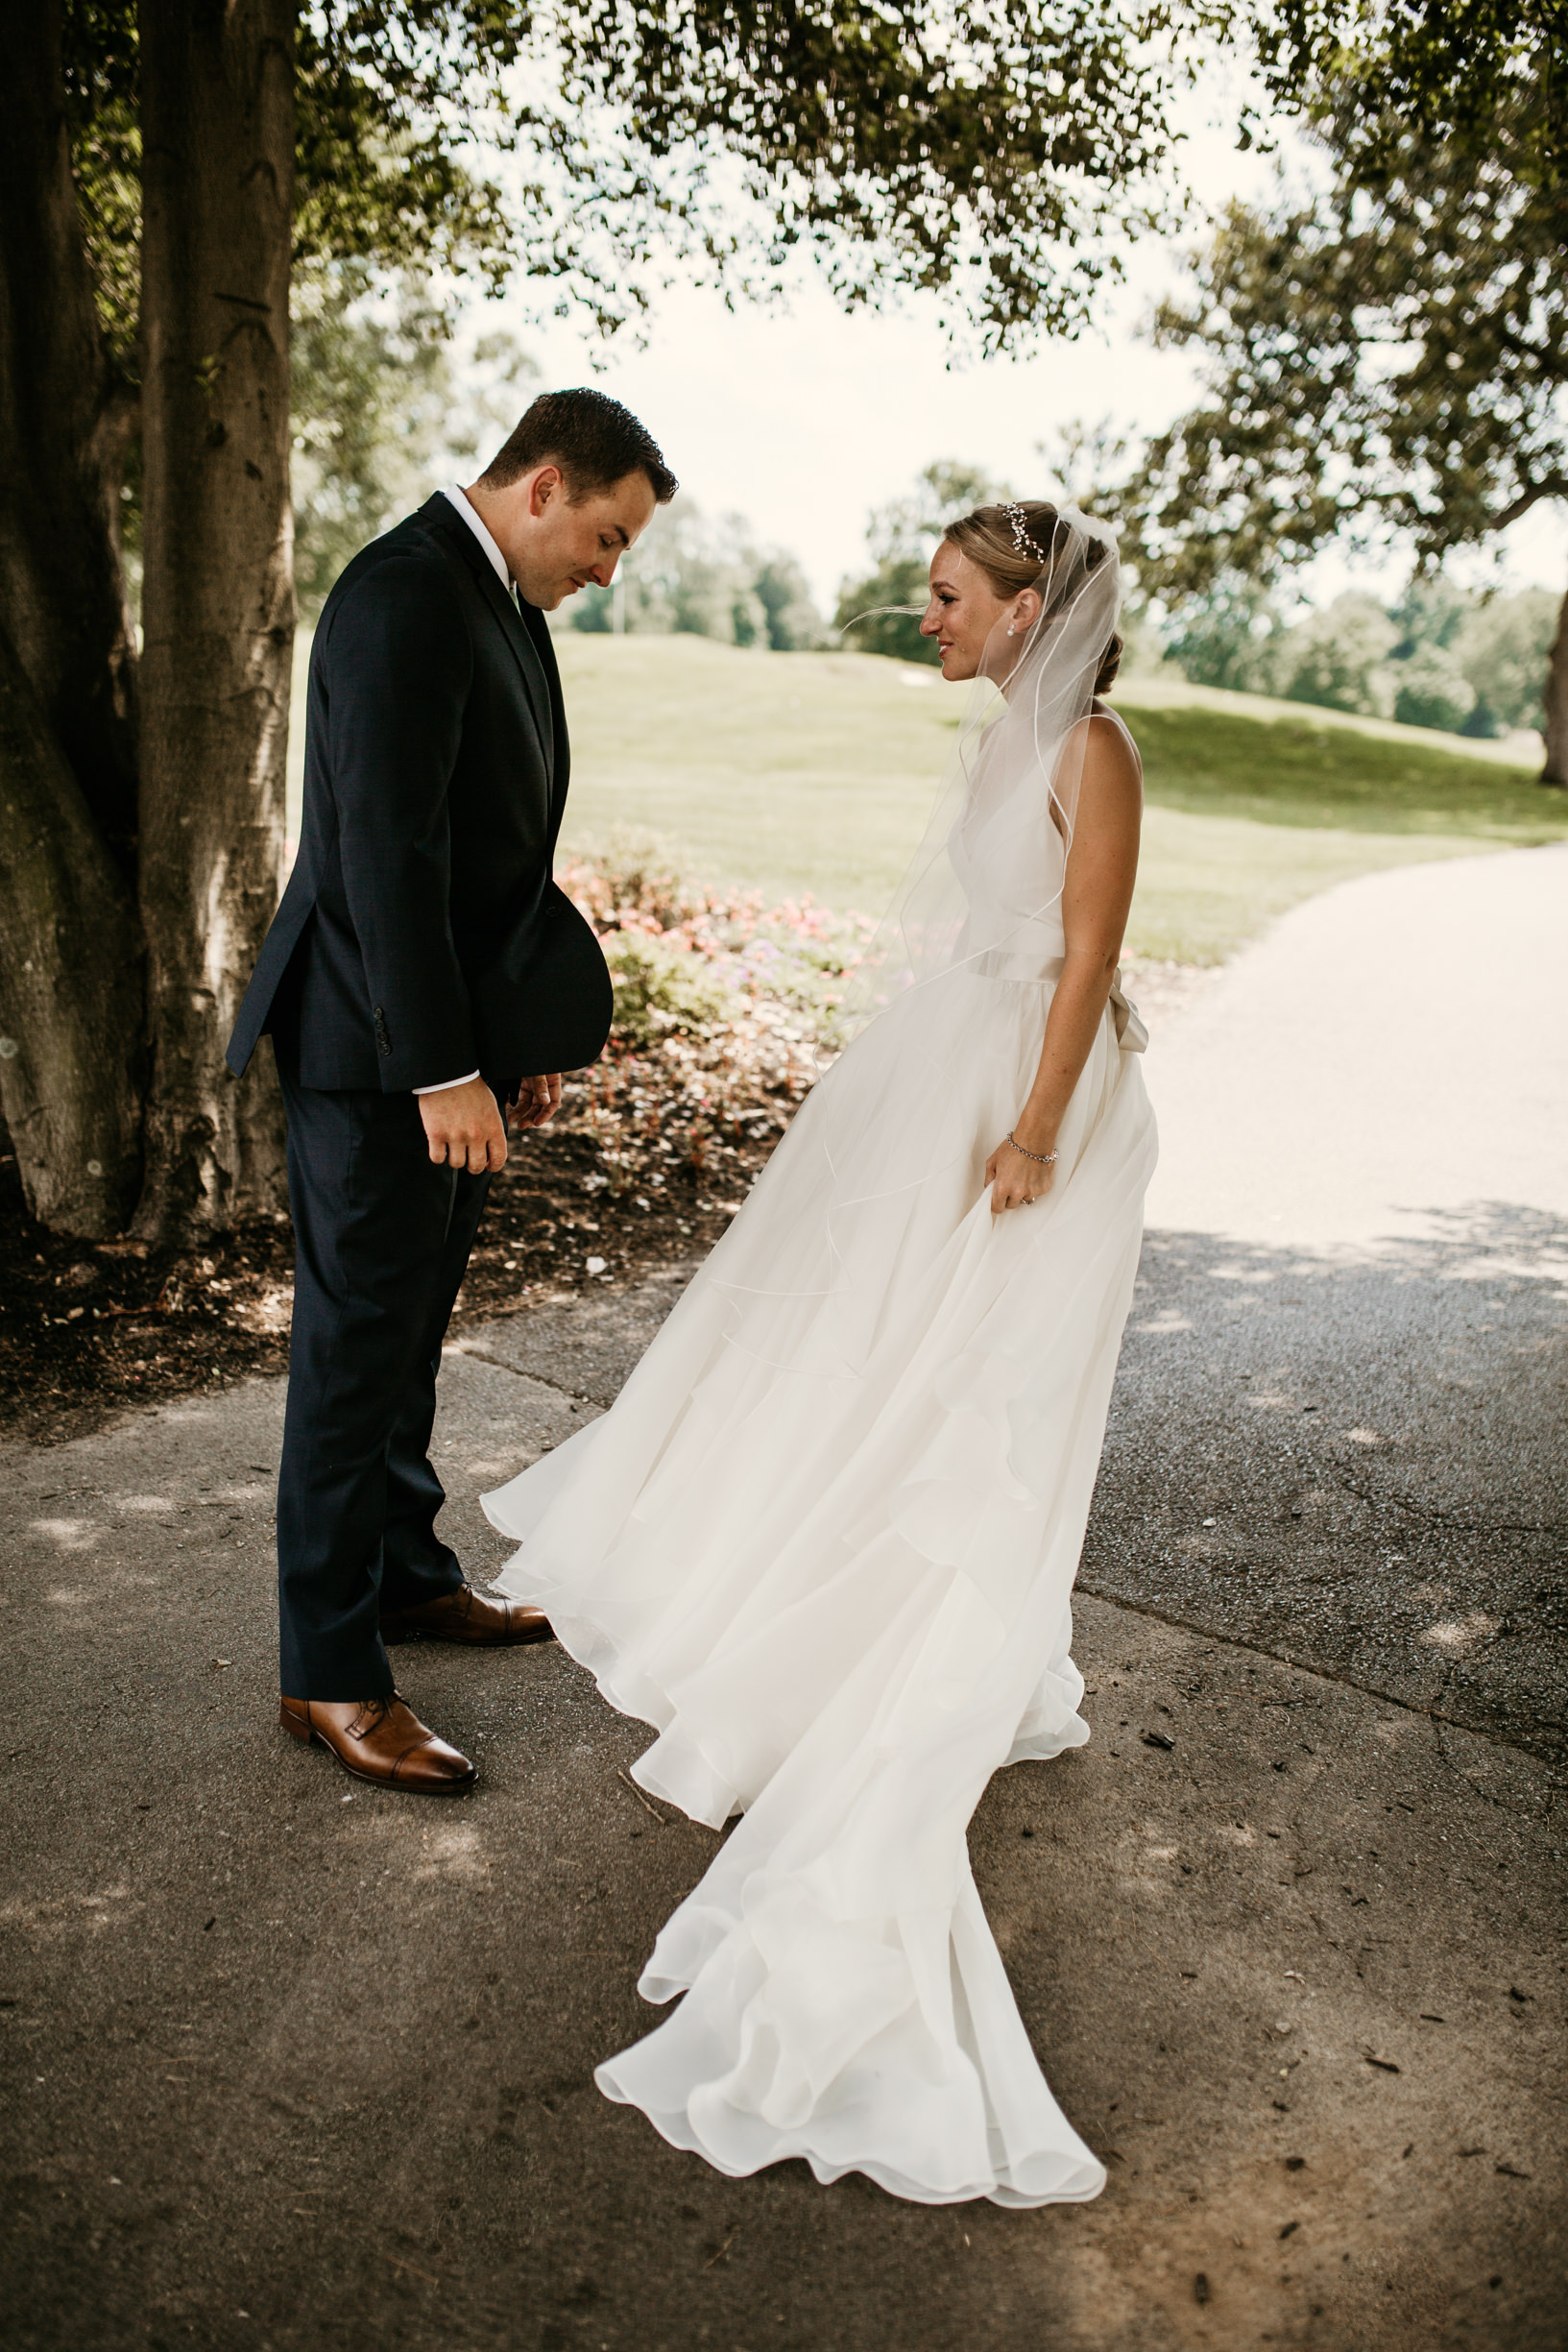 Crystal Ludwick Photo Louisvile Kentucky Louisville Photographer Wedding Photographer 2018  (35 of 210).jpg